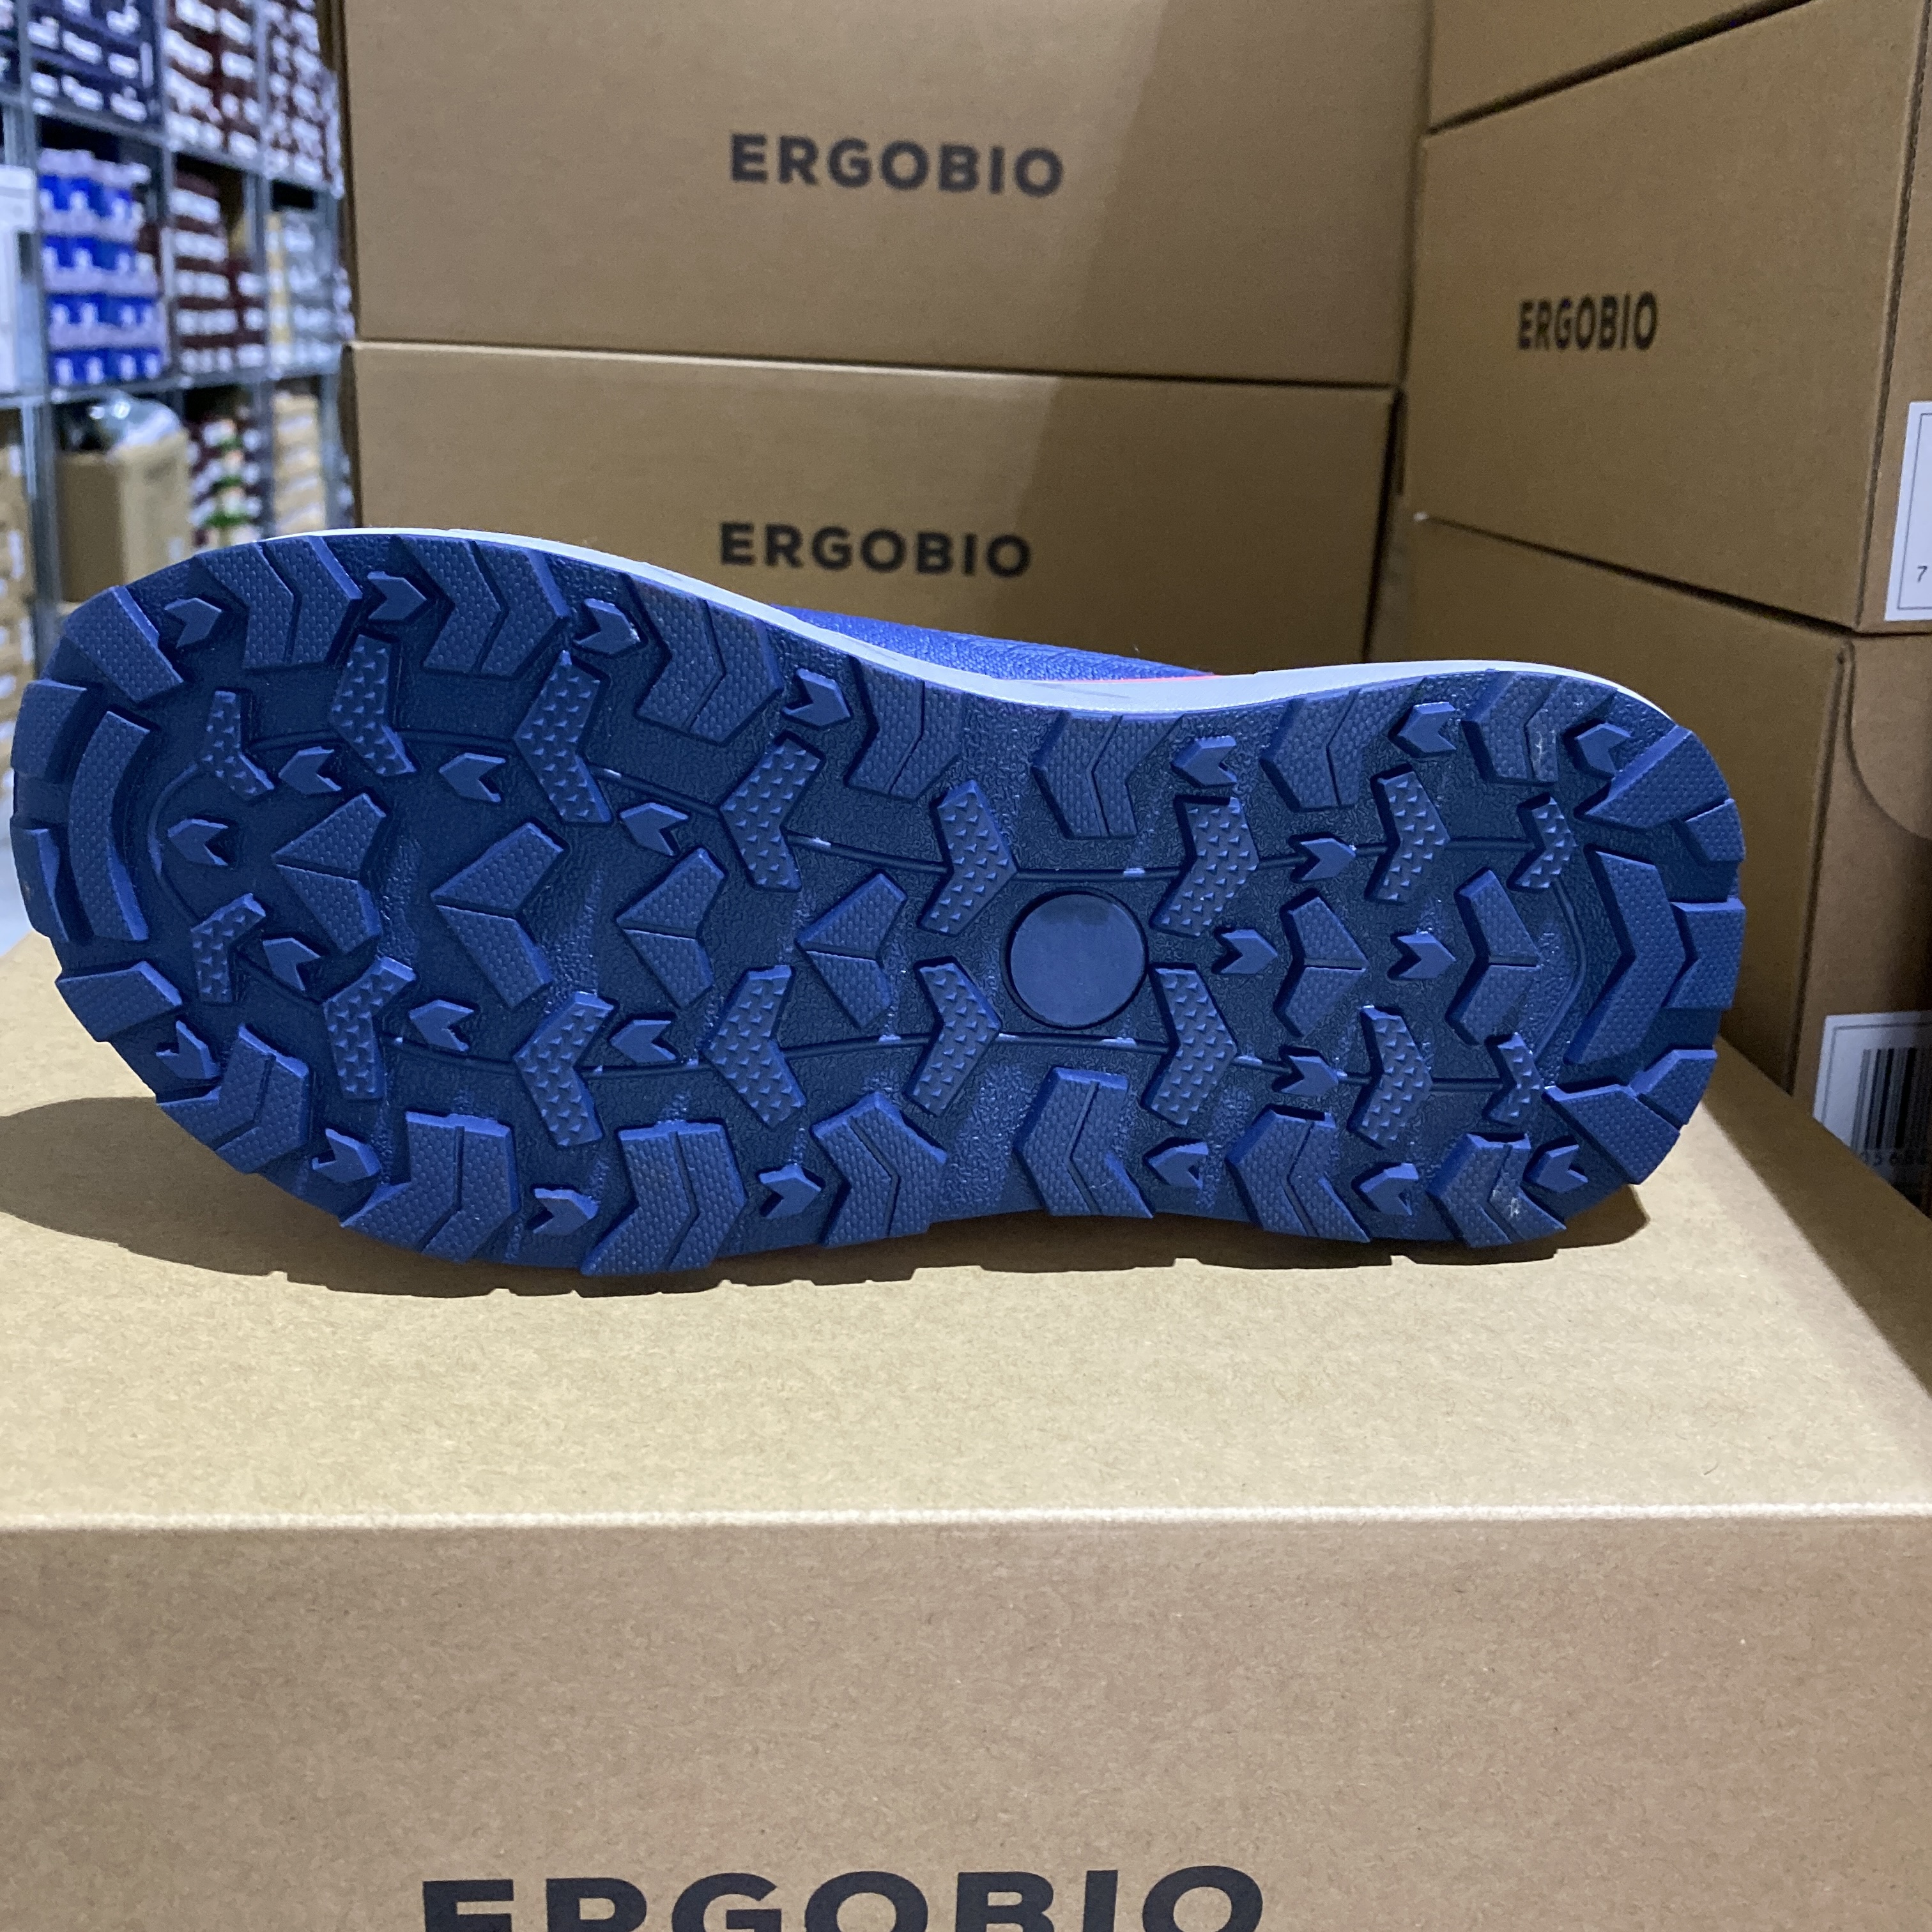 ergobio tecliner low blue dame sneakers1